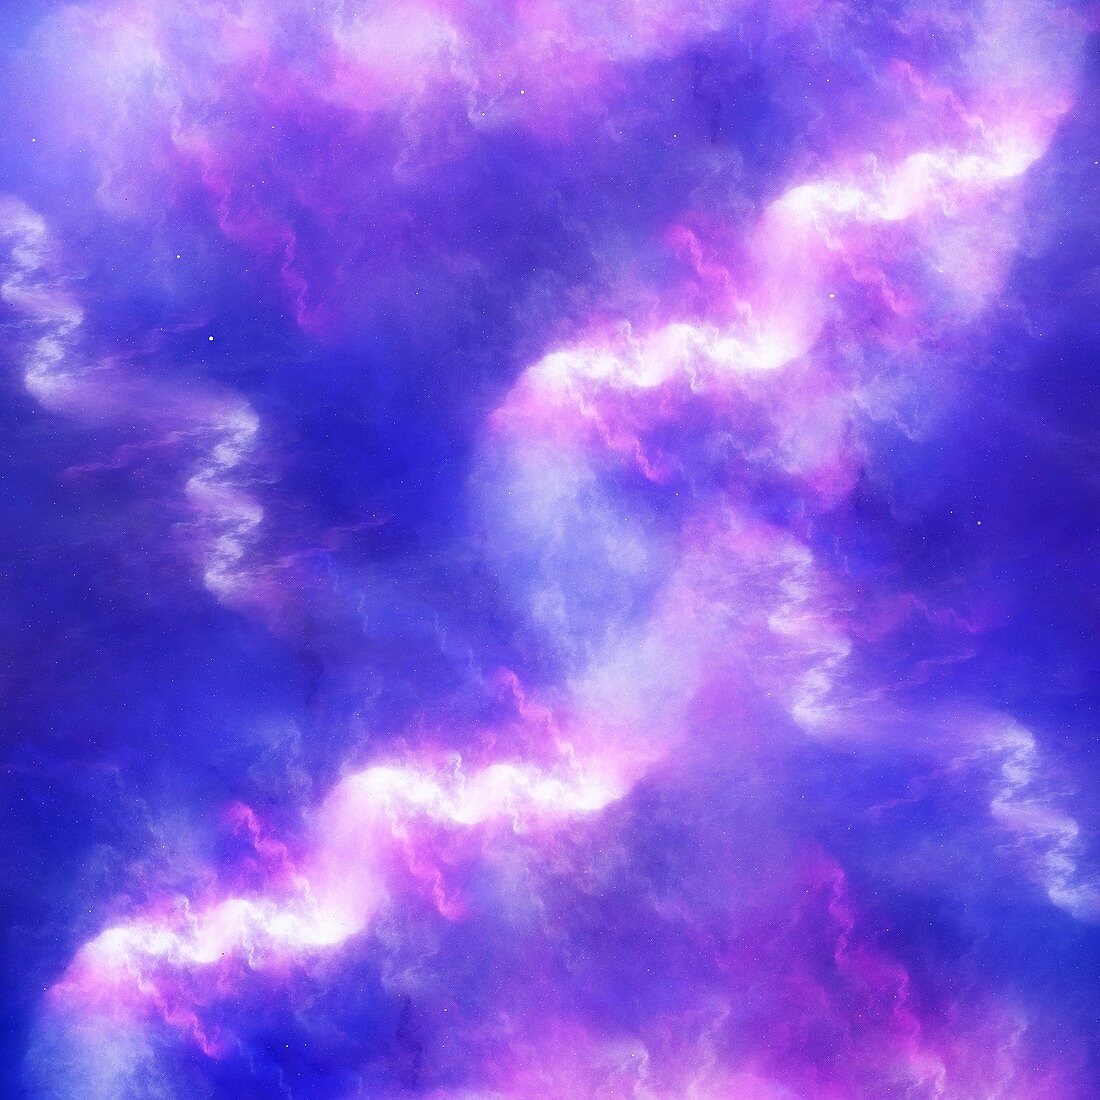 High energy nebula, abstract illustration